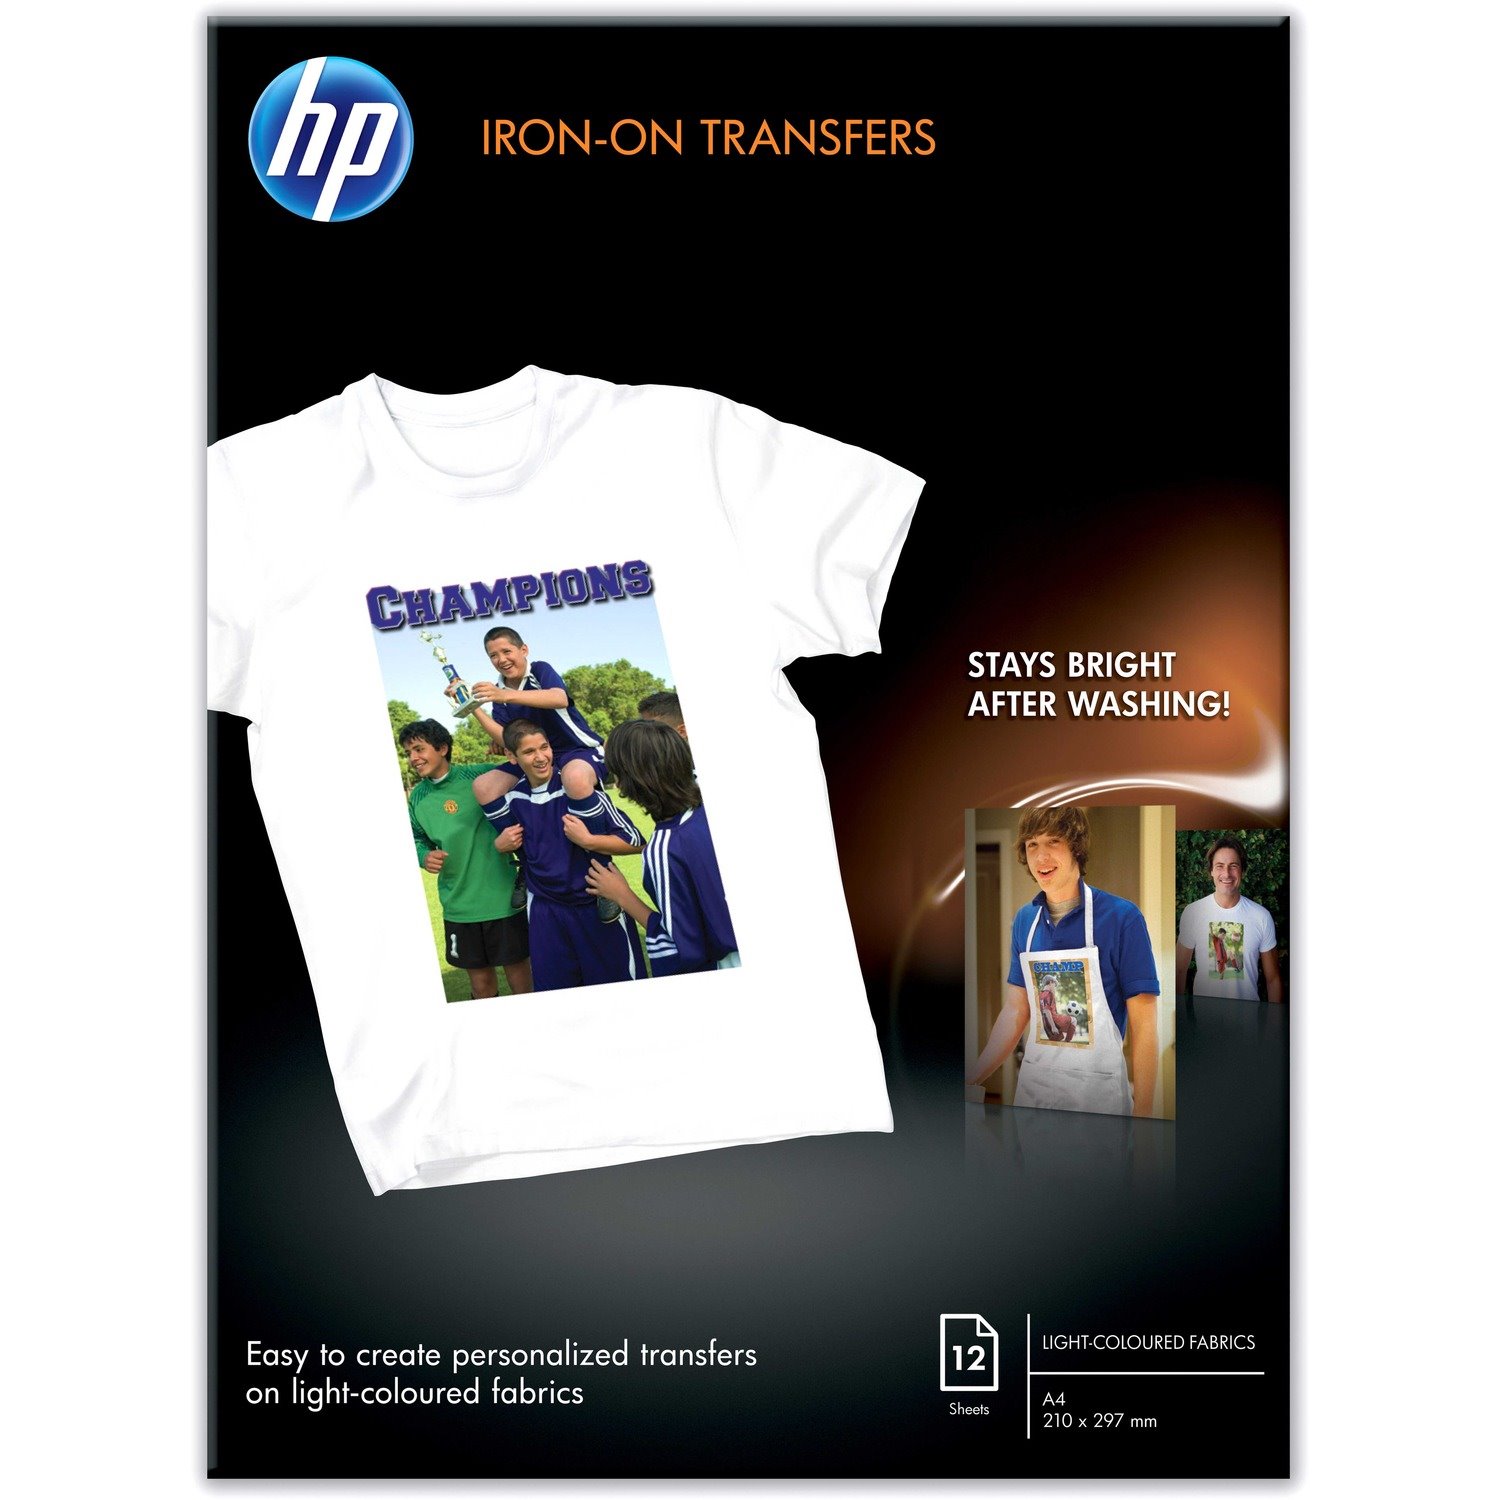 HP Iron-on Transfer